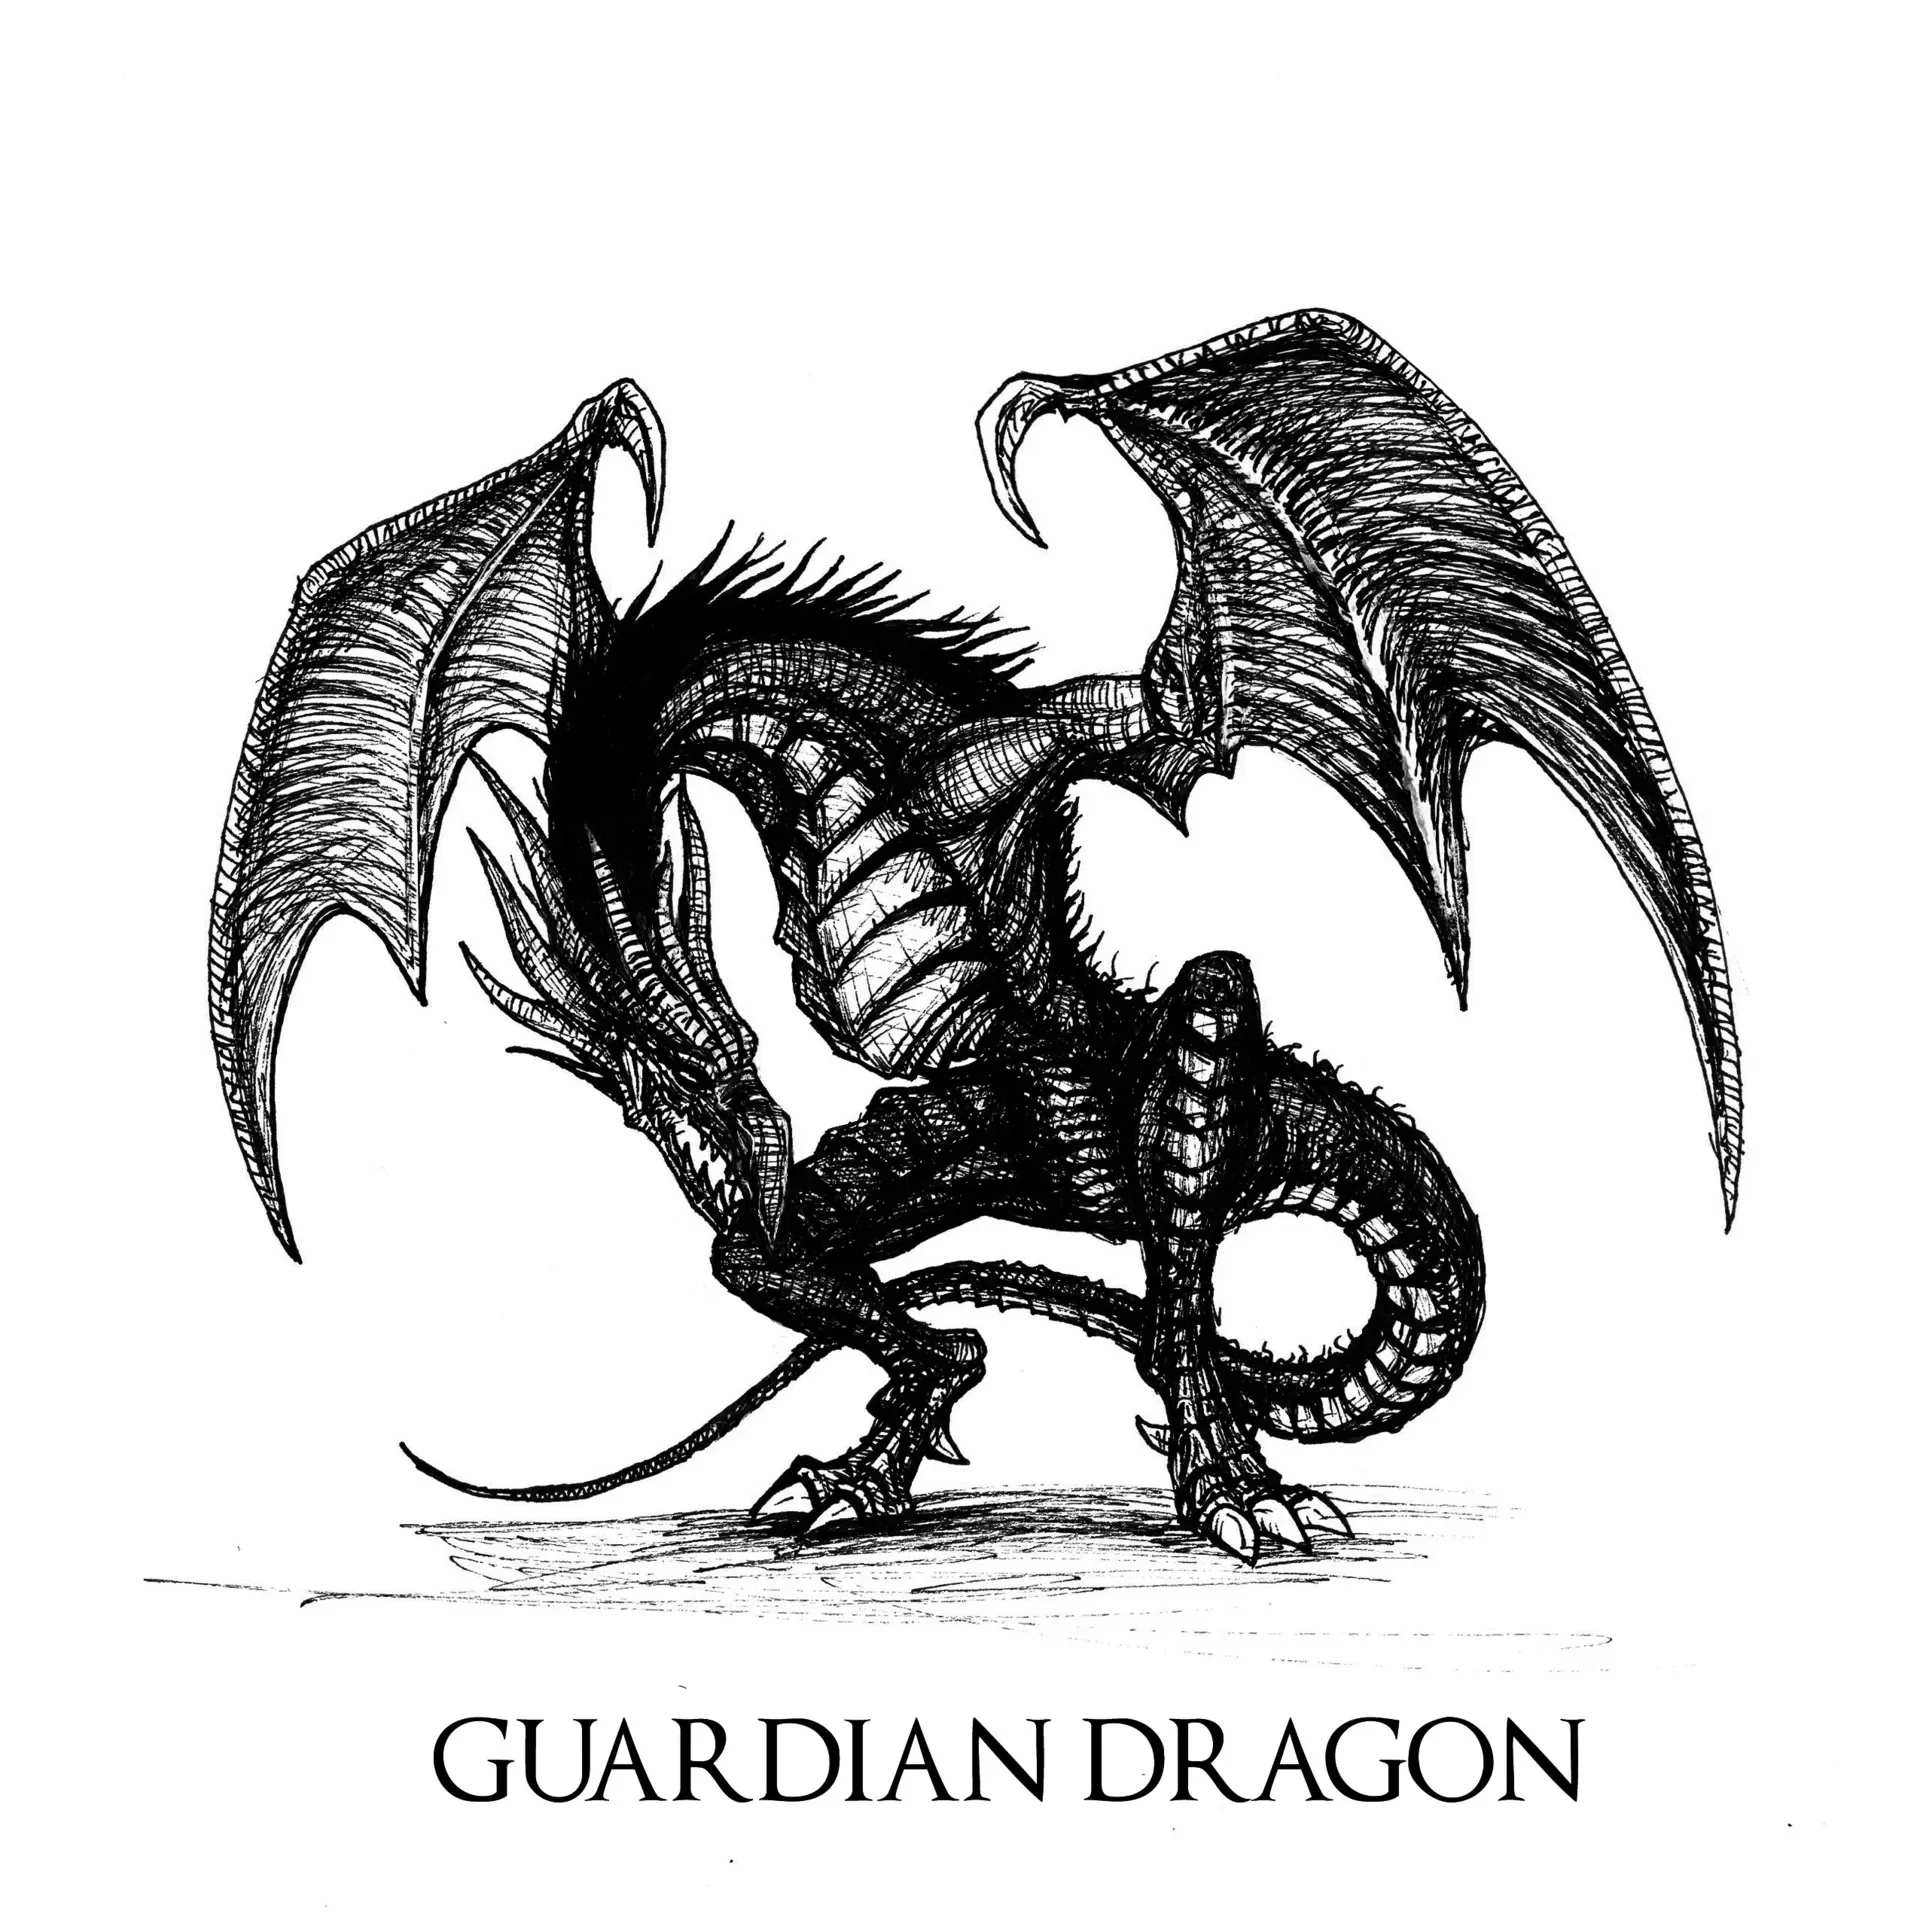 Японский - 護 り 竜 mamori ryu: Английский - Guardian Dragon Русский - Дракон-...